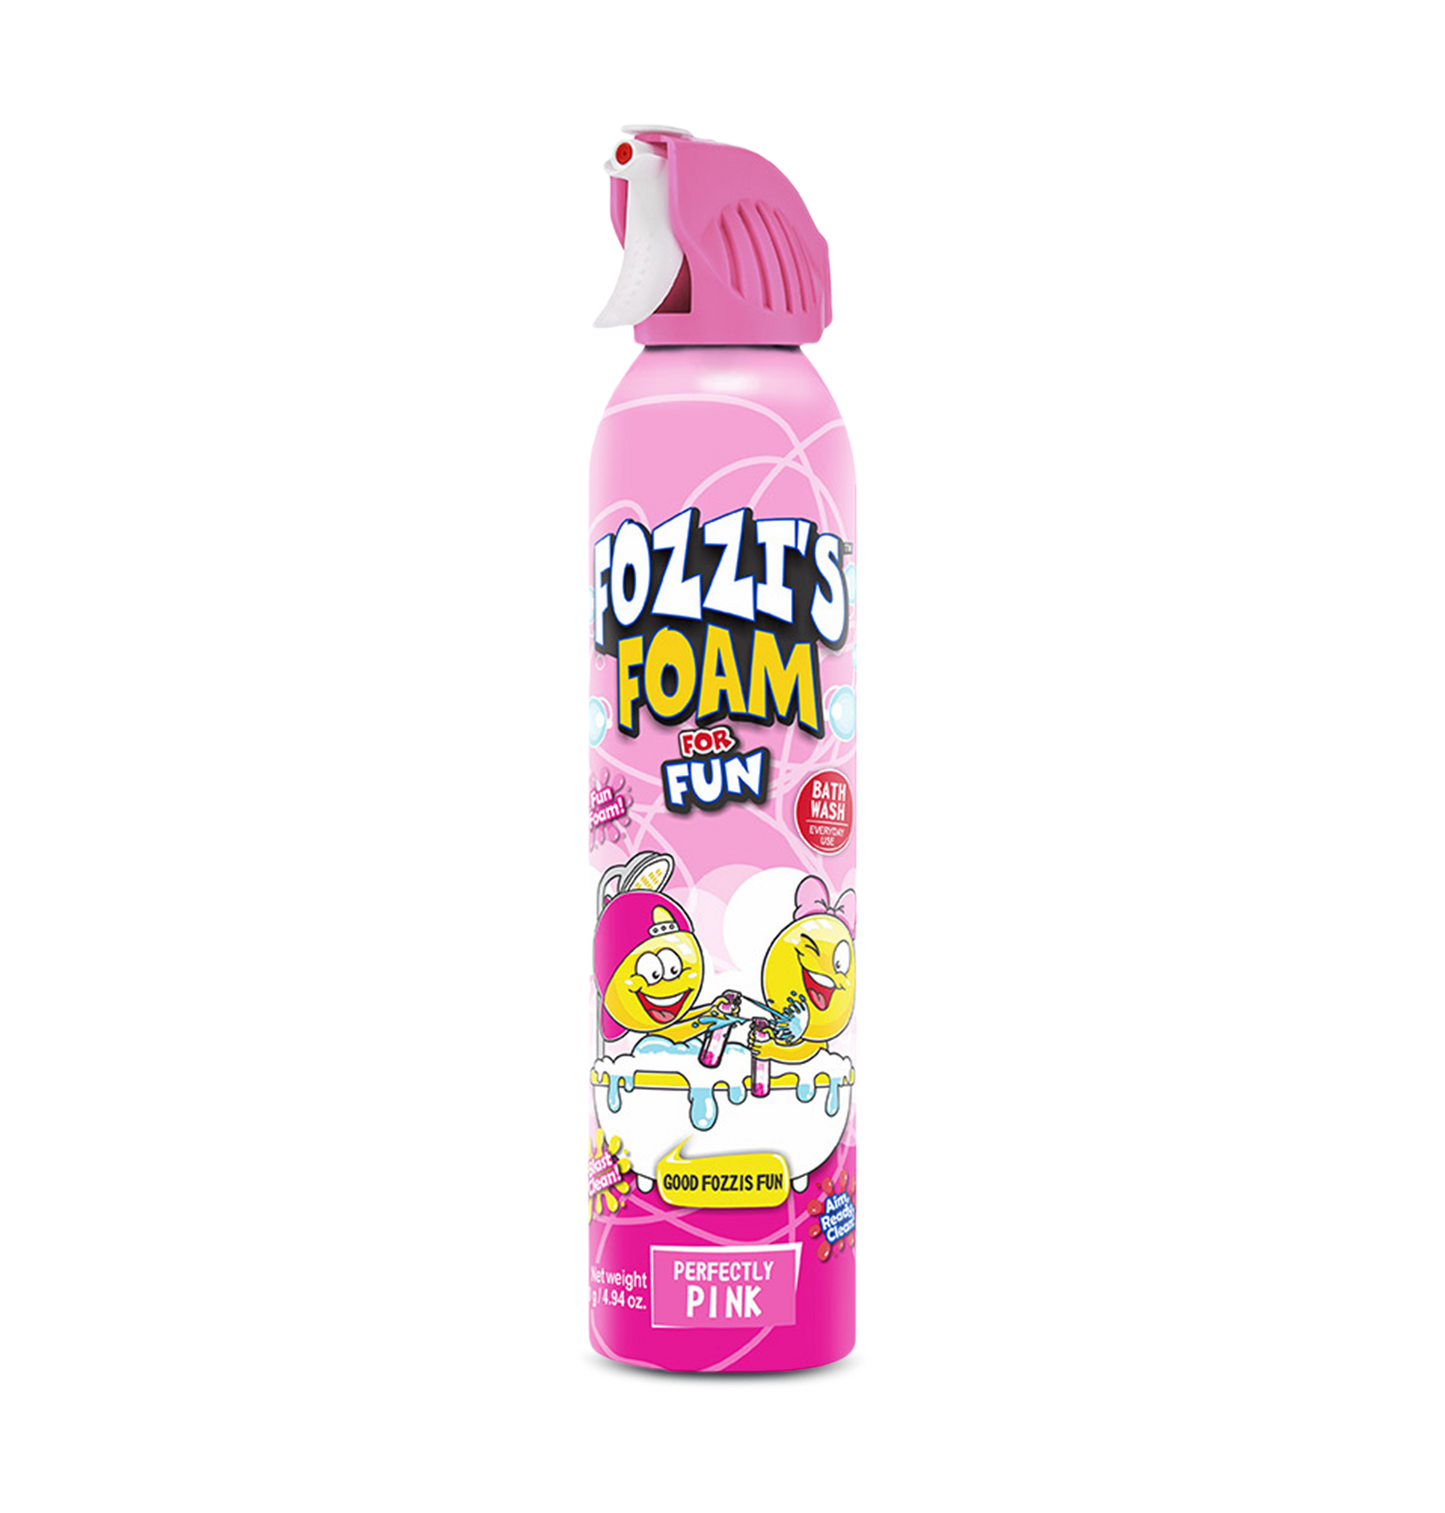 Fozzi's Foam - Perfectly Pink